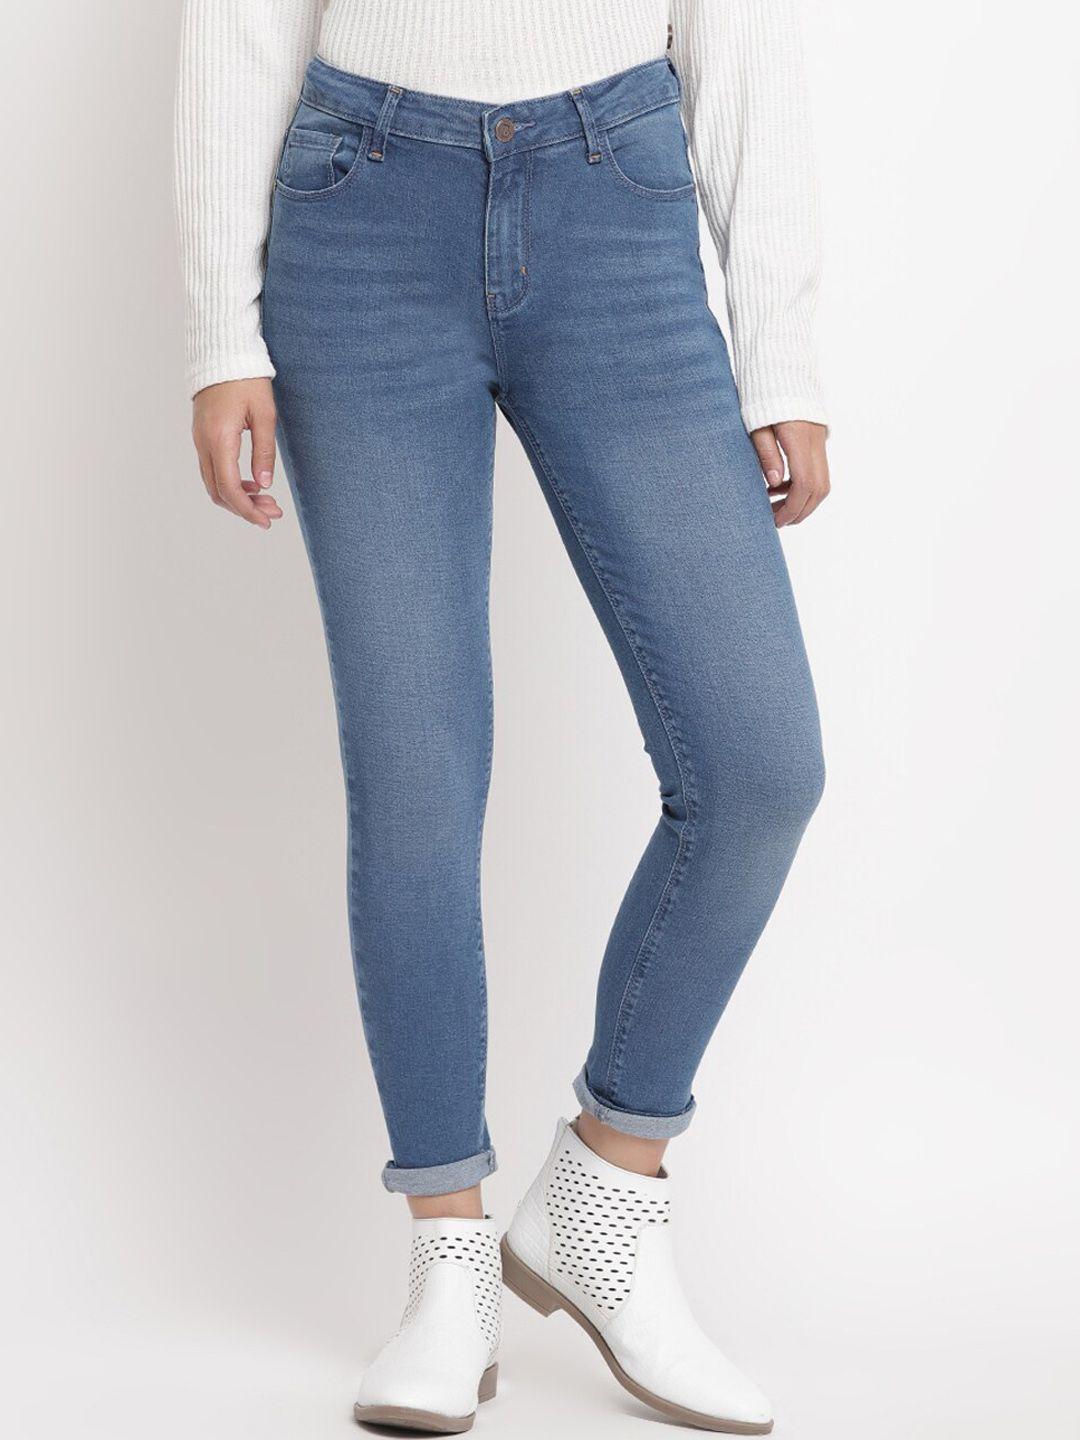 belliskey-women-blue-slim-fit-mid-rise-clean-look-jeans